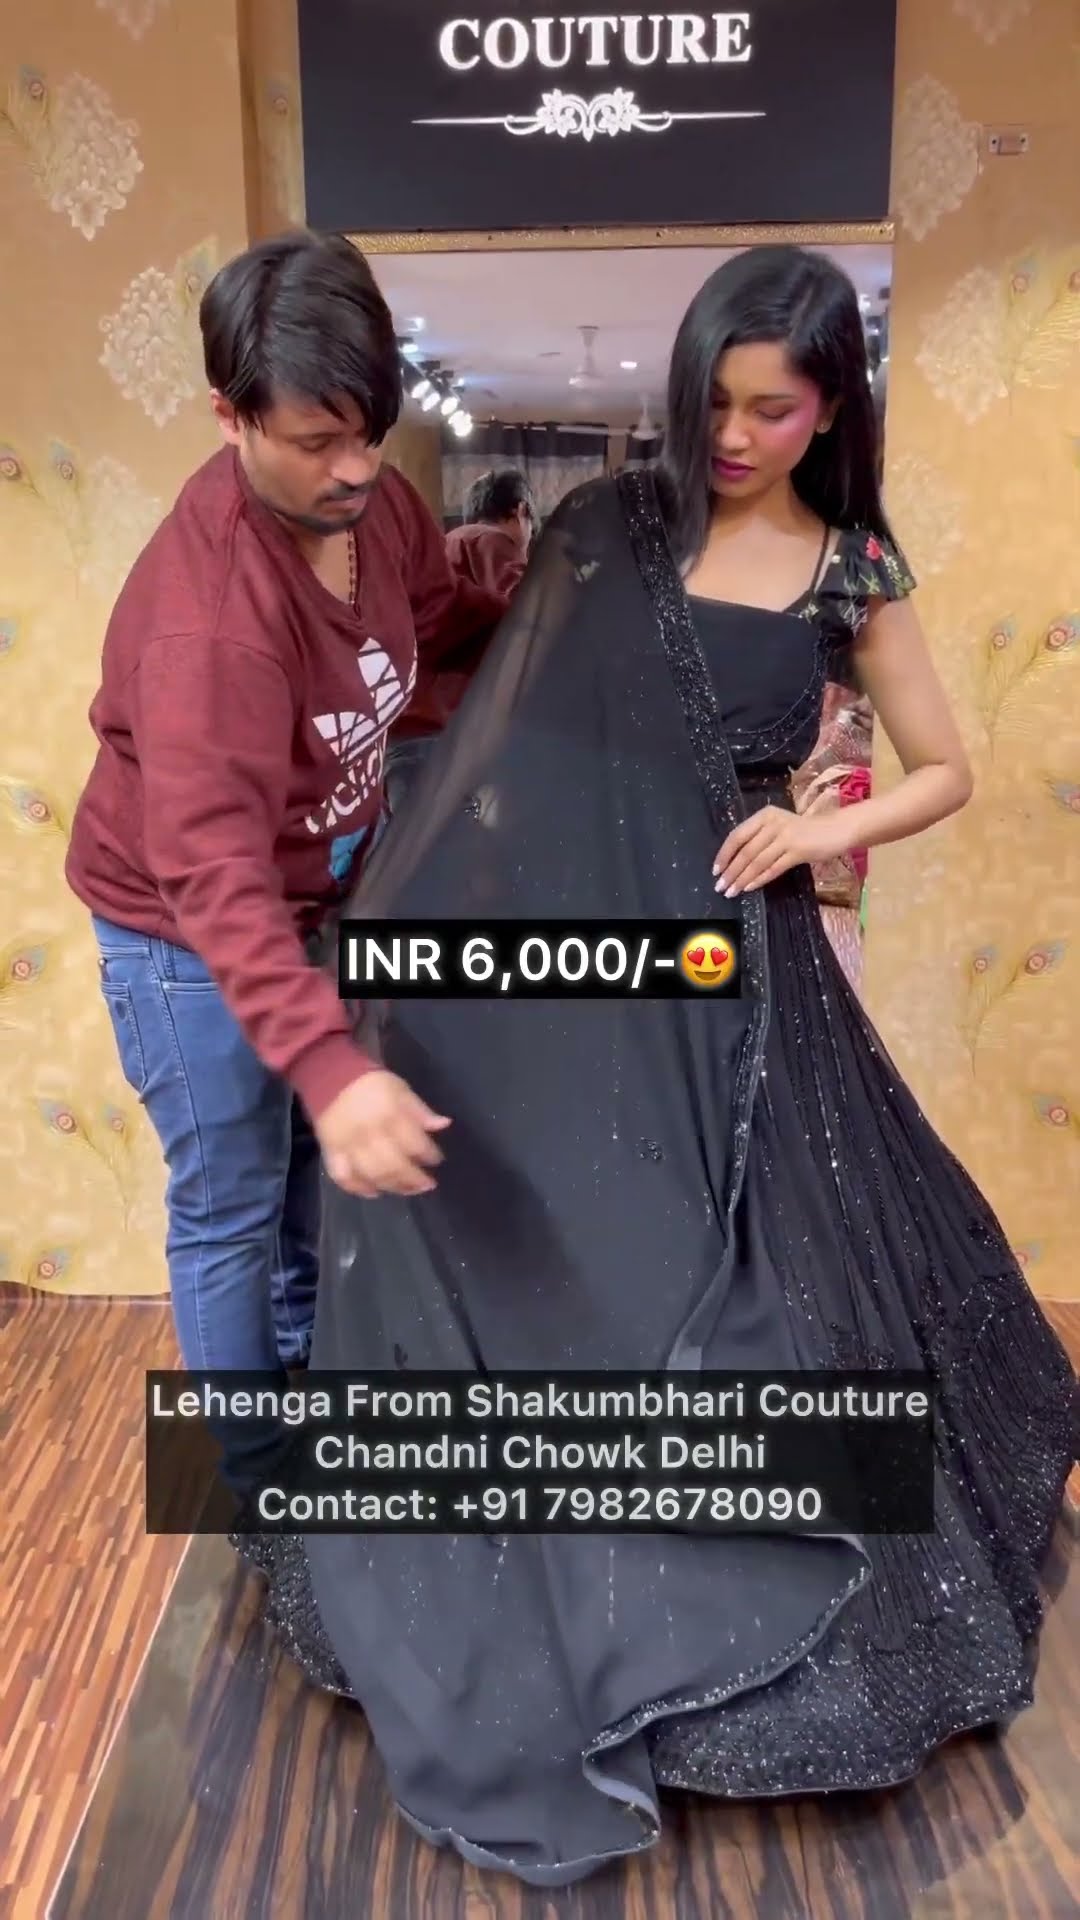 Lehenga Shopping in Chandni Chowk on Instagram: 